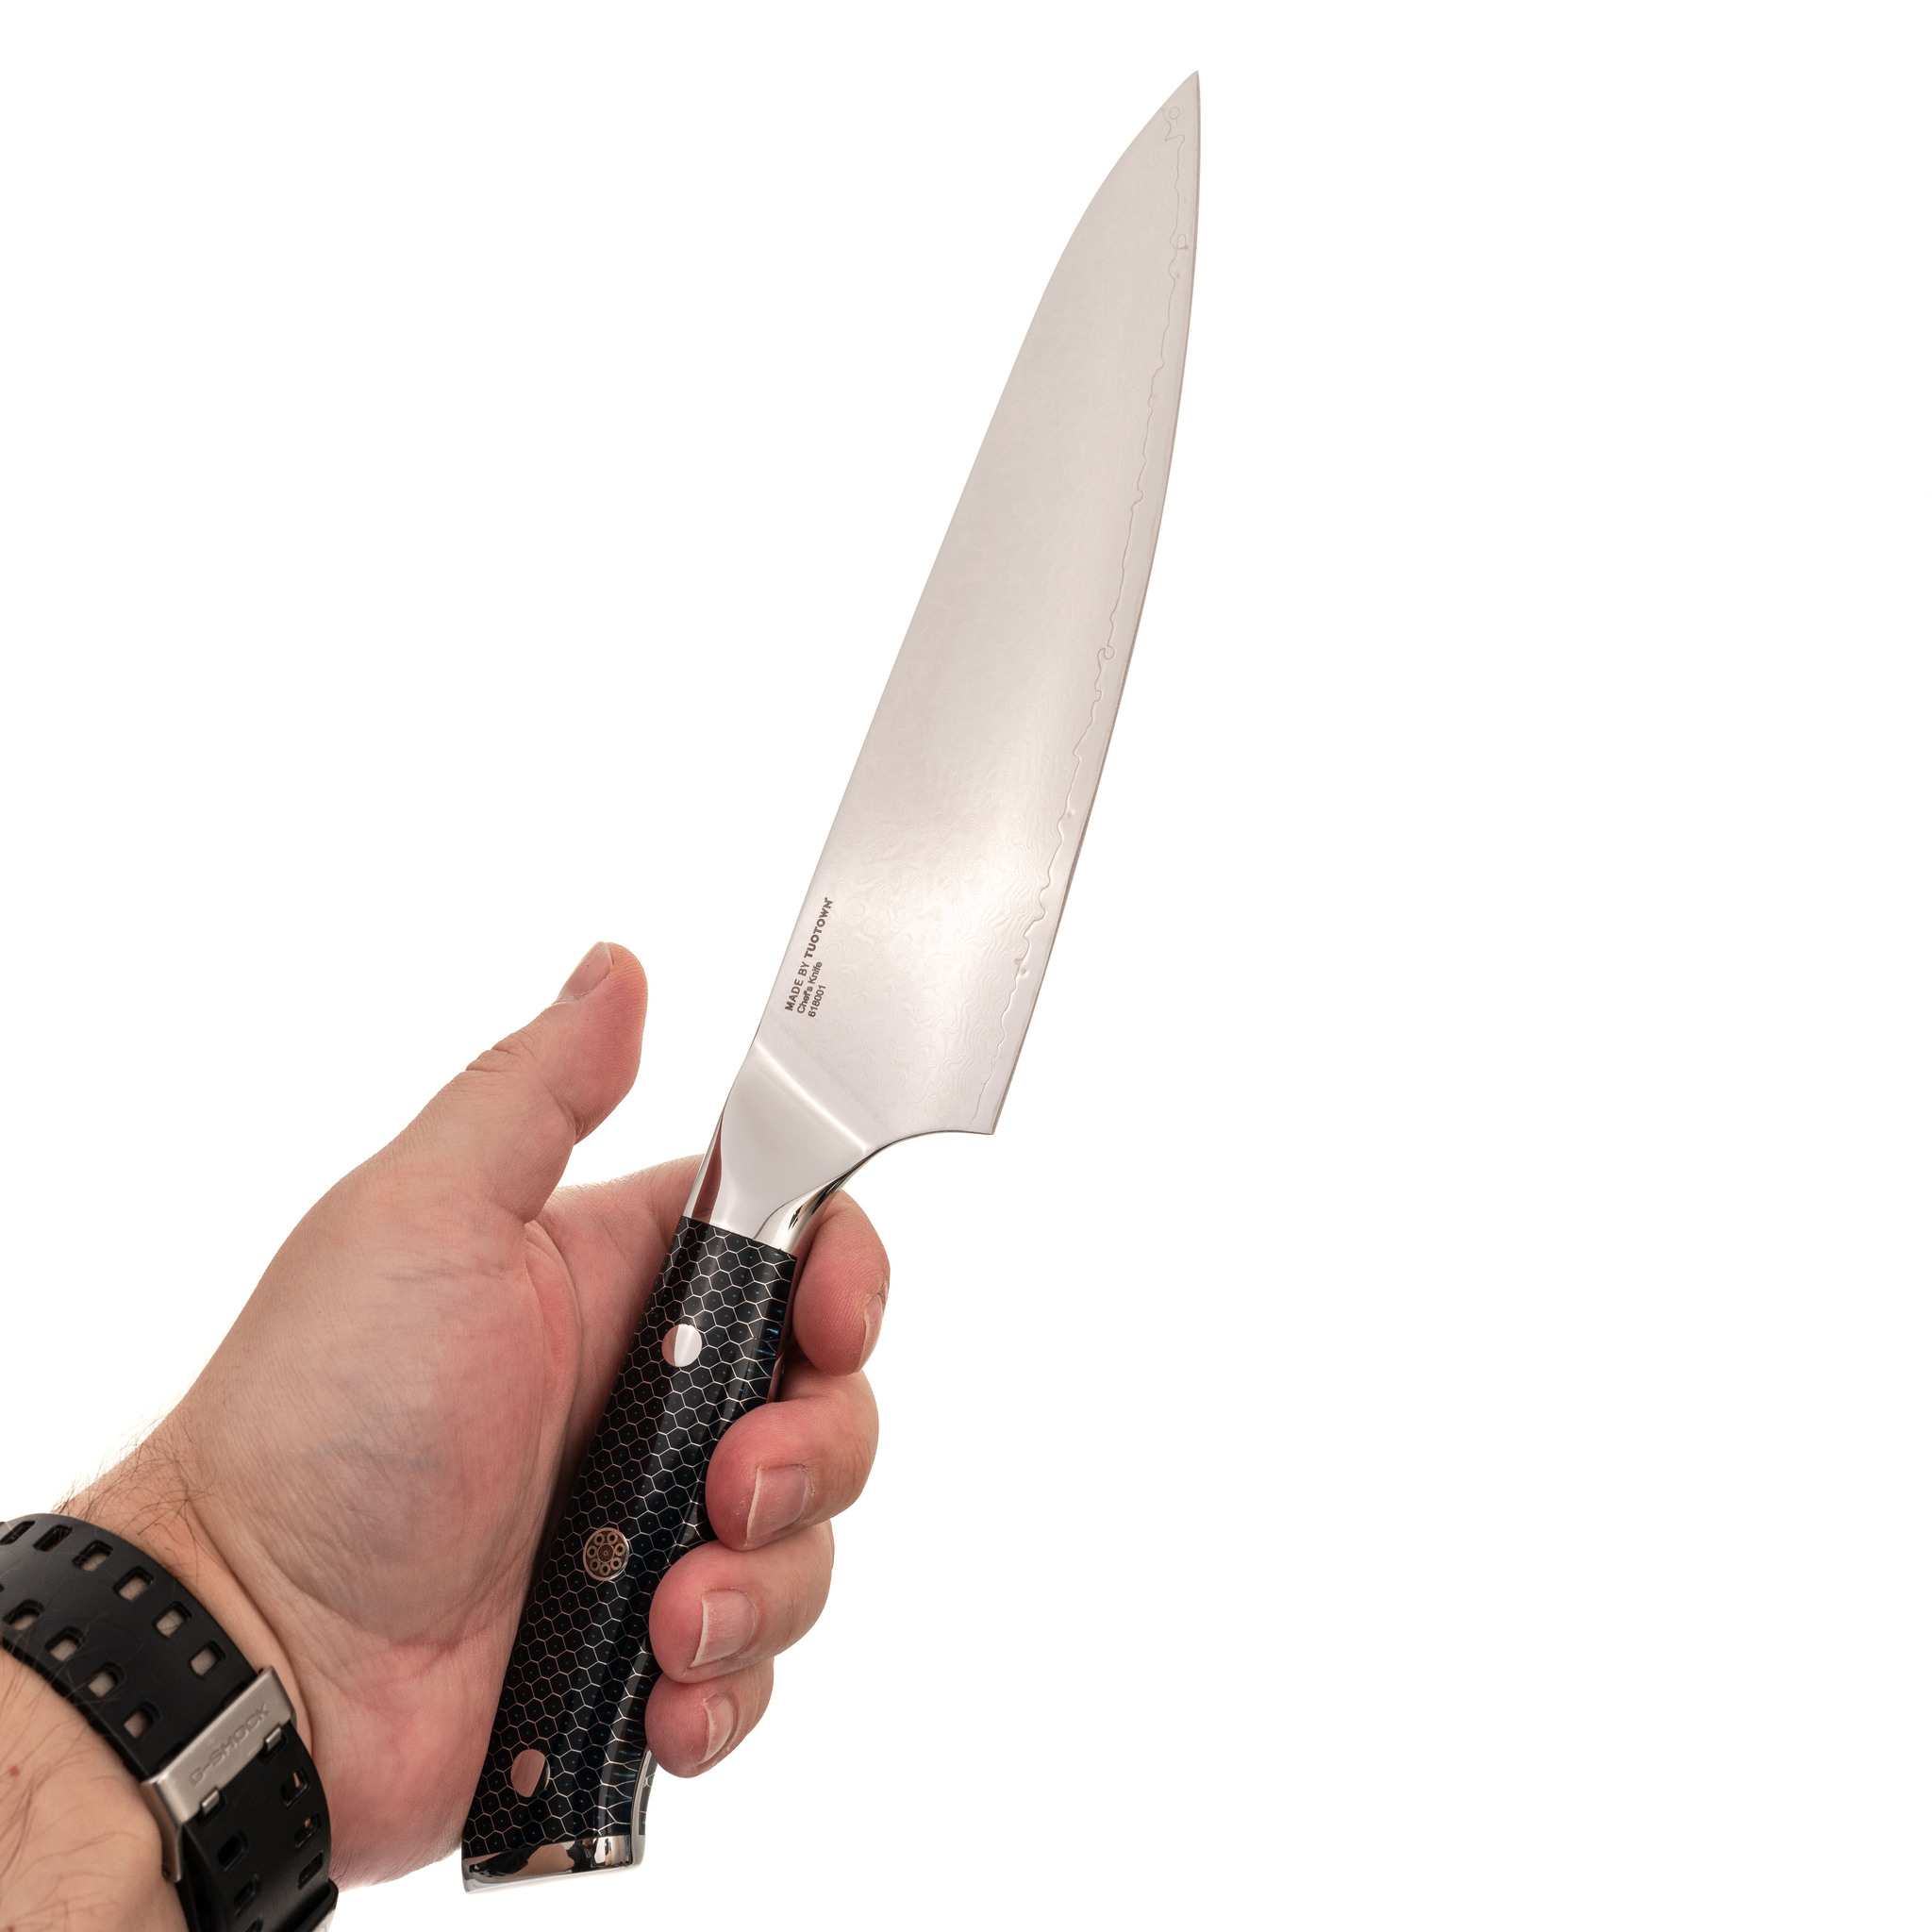 Кухонный нож Шеф Tuotown, сталь VG10, обкладка Damascus, рукоять акрил, синий - фото 4